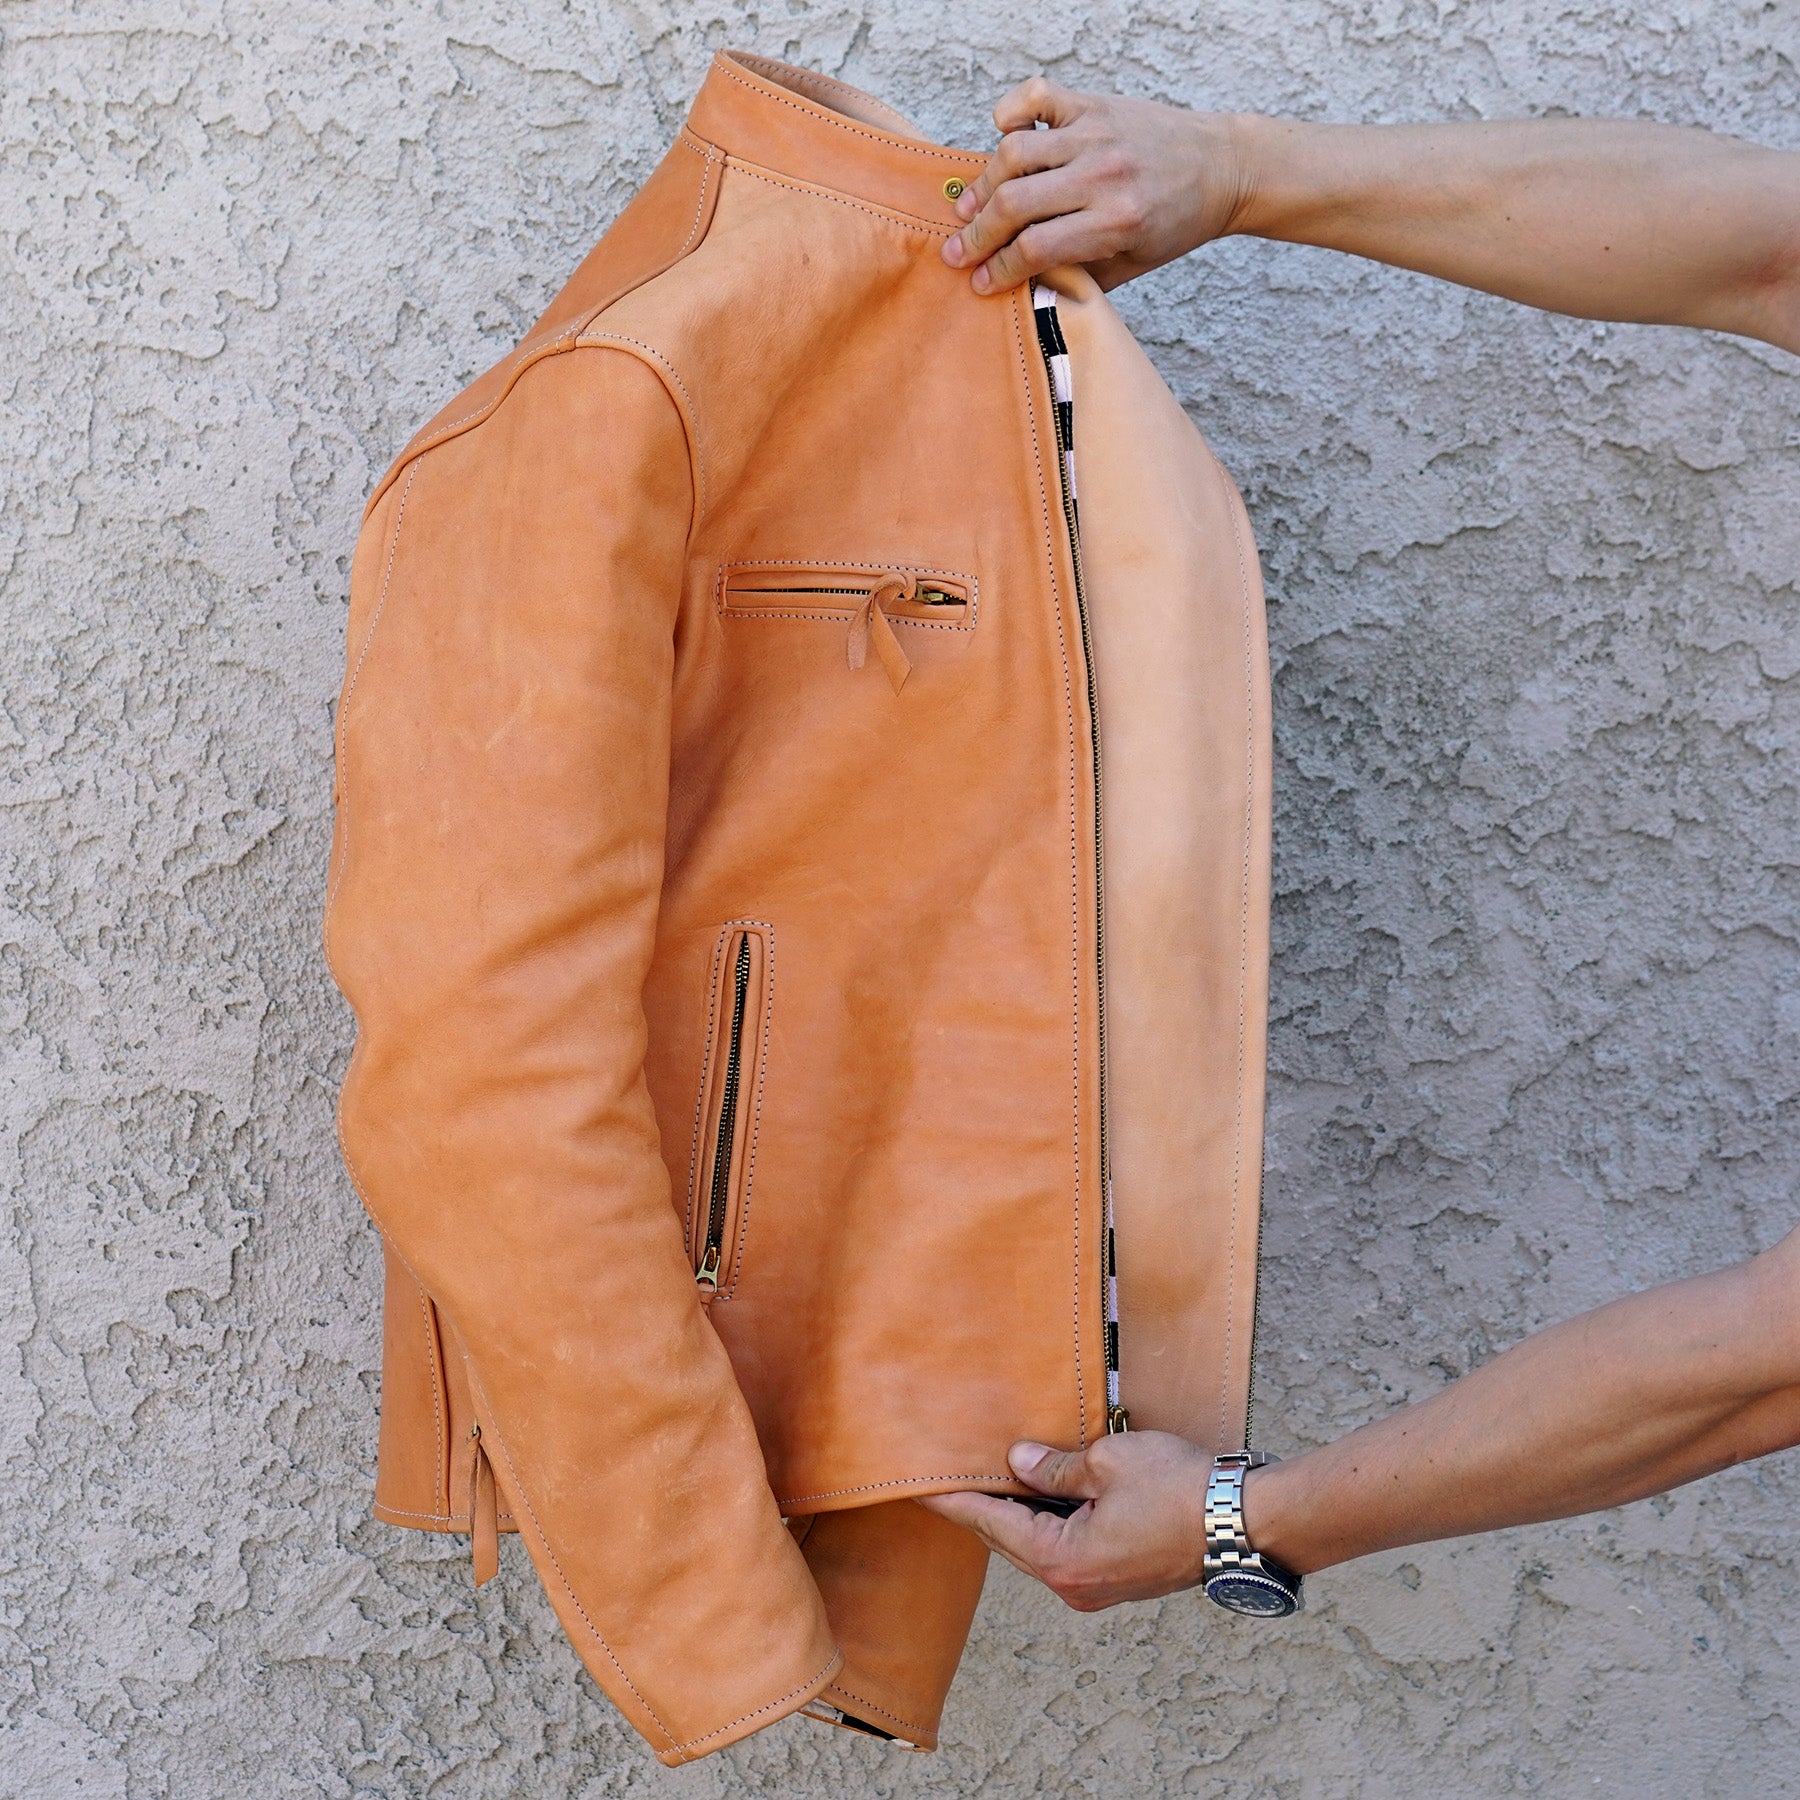 Custom Unfinished Horsehide Leather Jacket Project Deposit